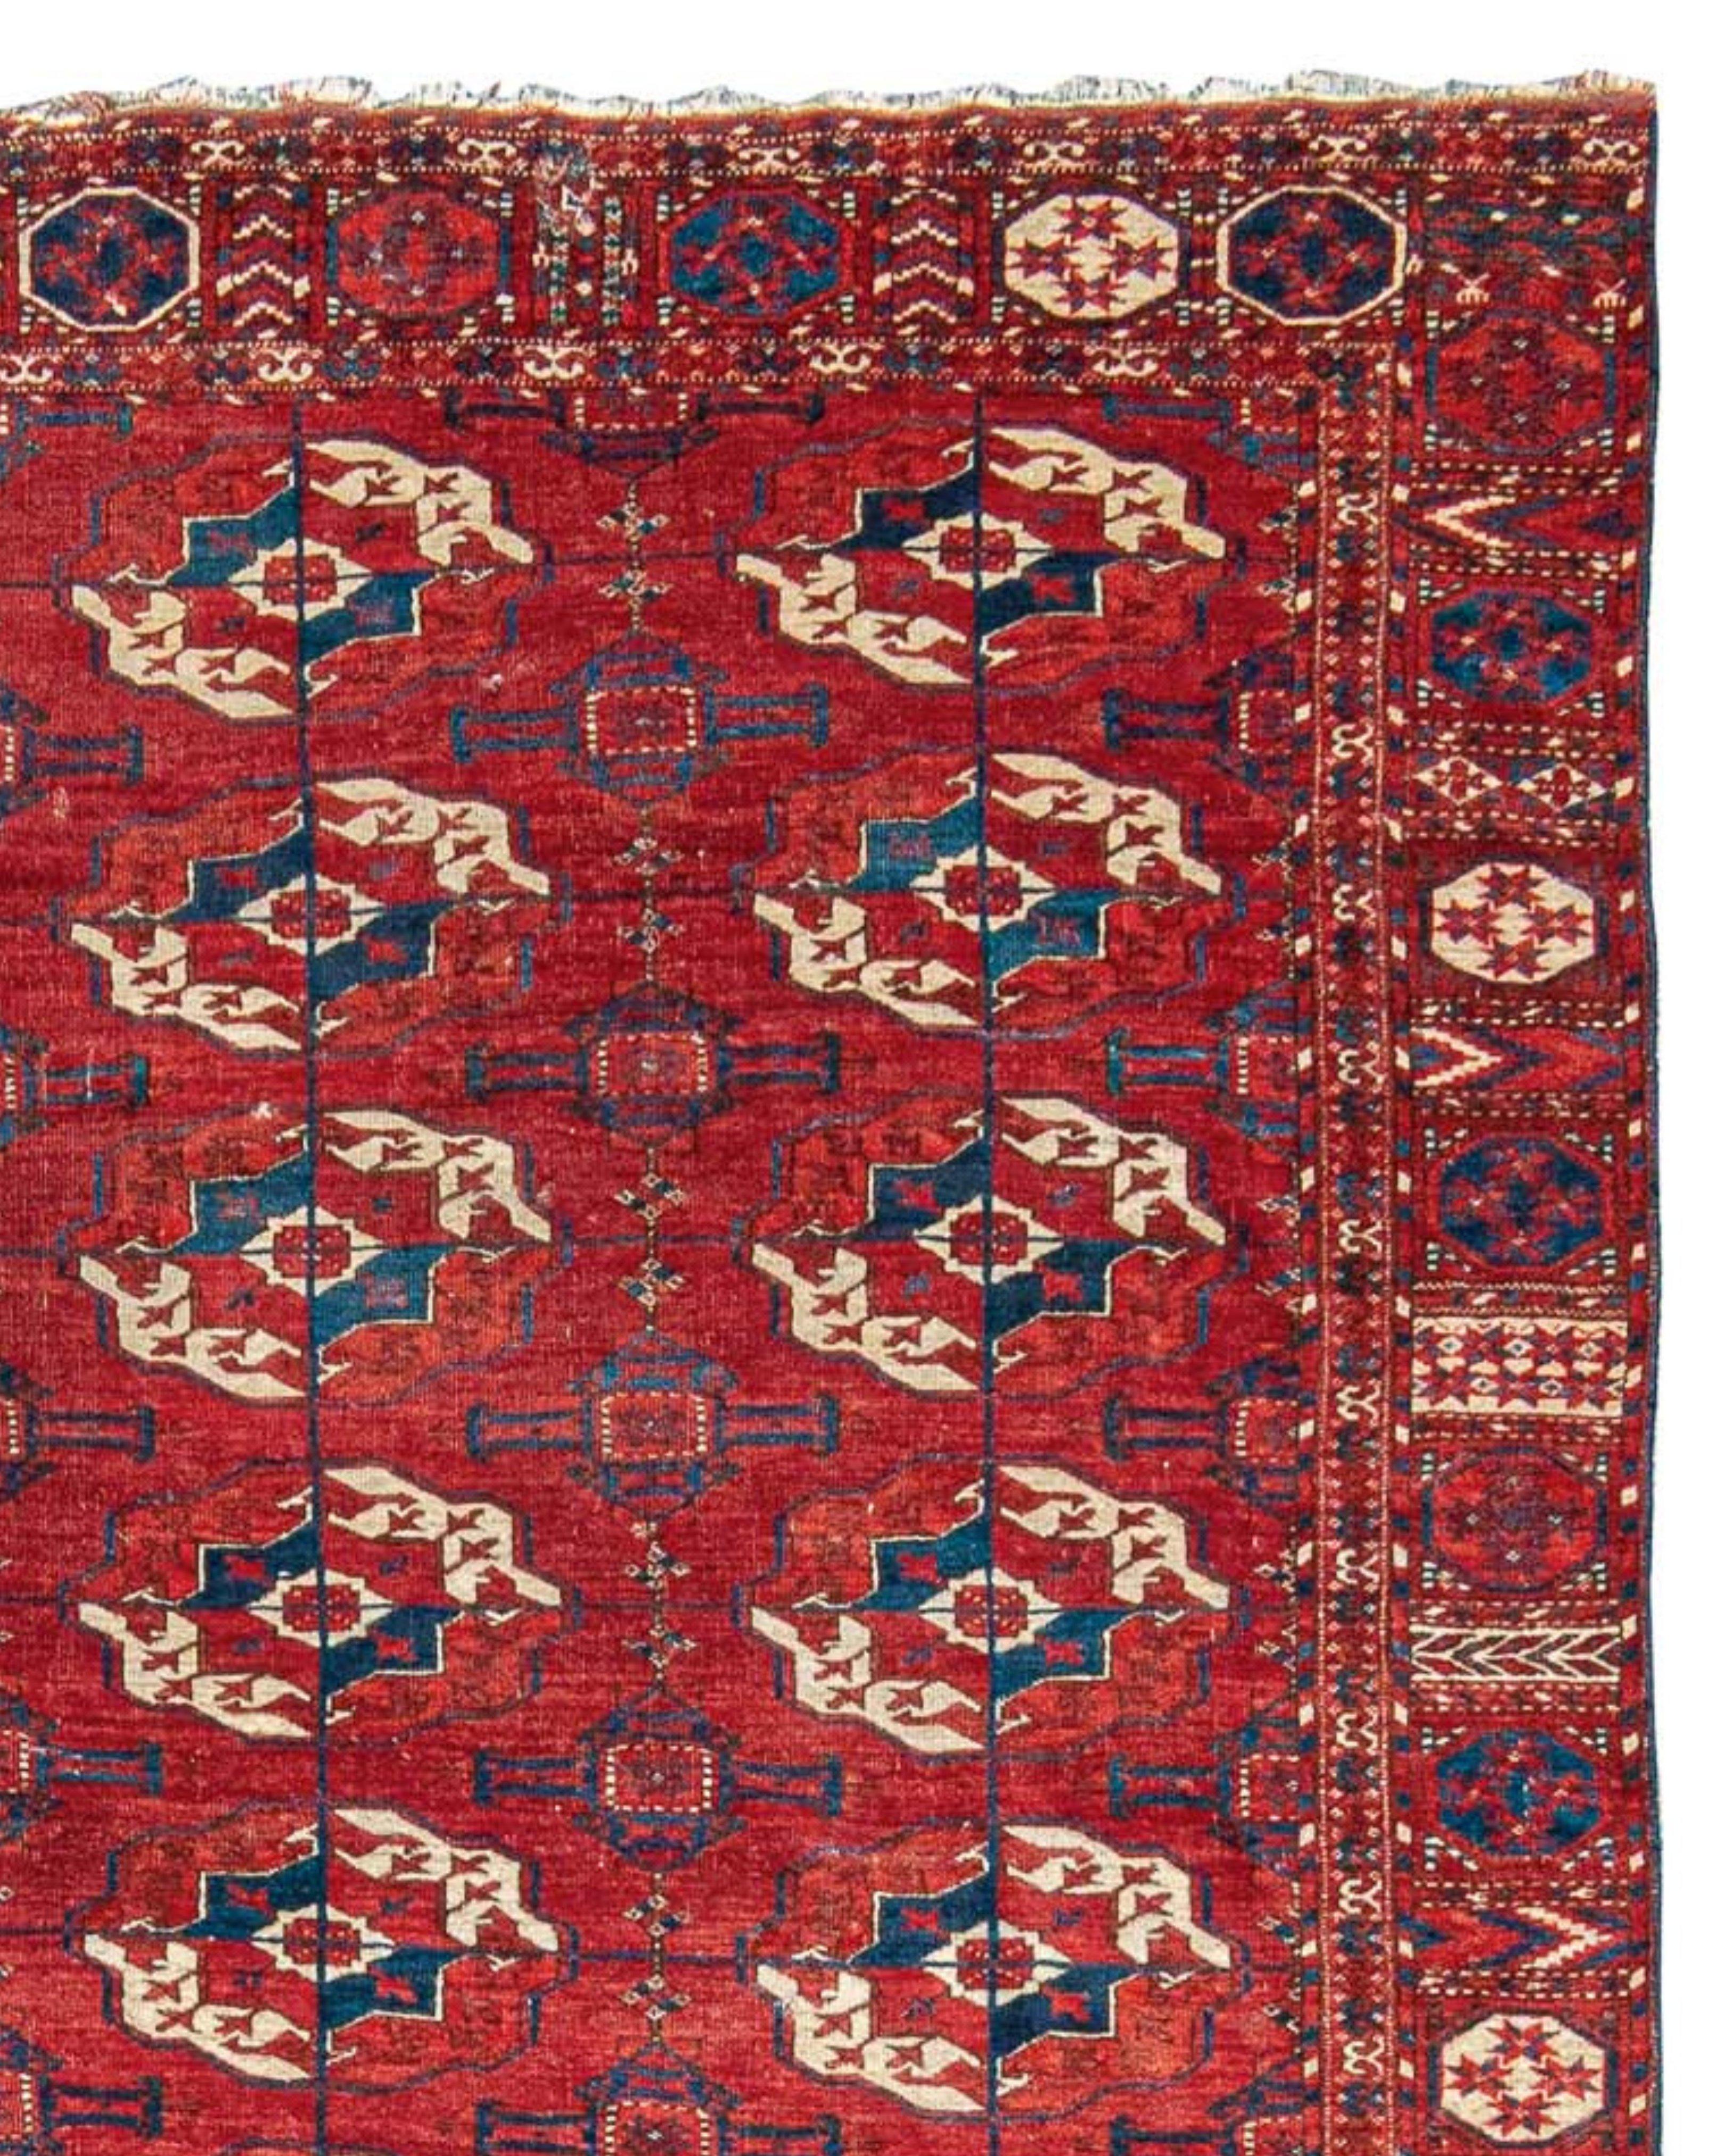 Tekke Main Carpet, 19th century

Additional Information:
Dimensions: 6'4